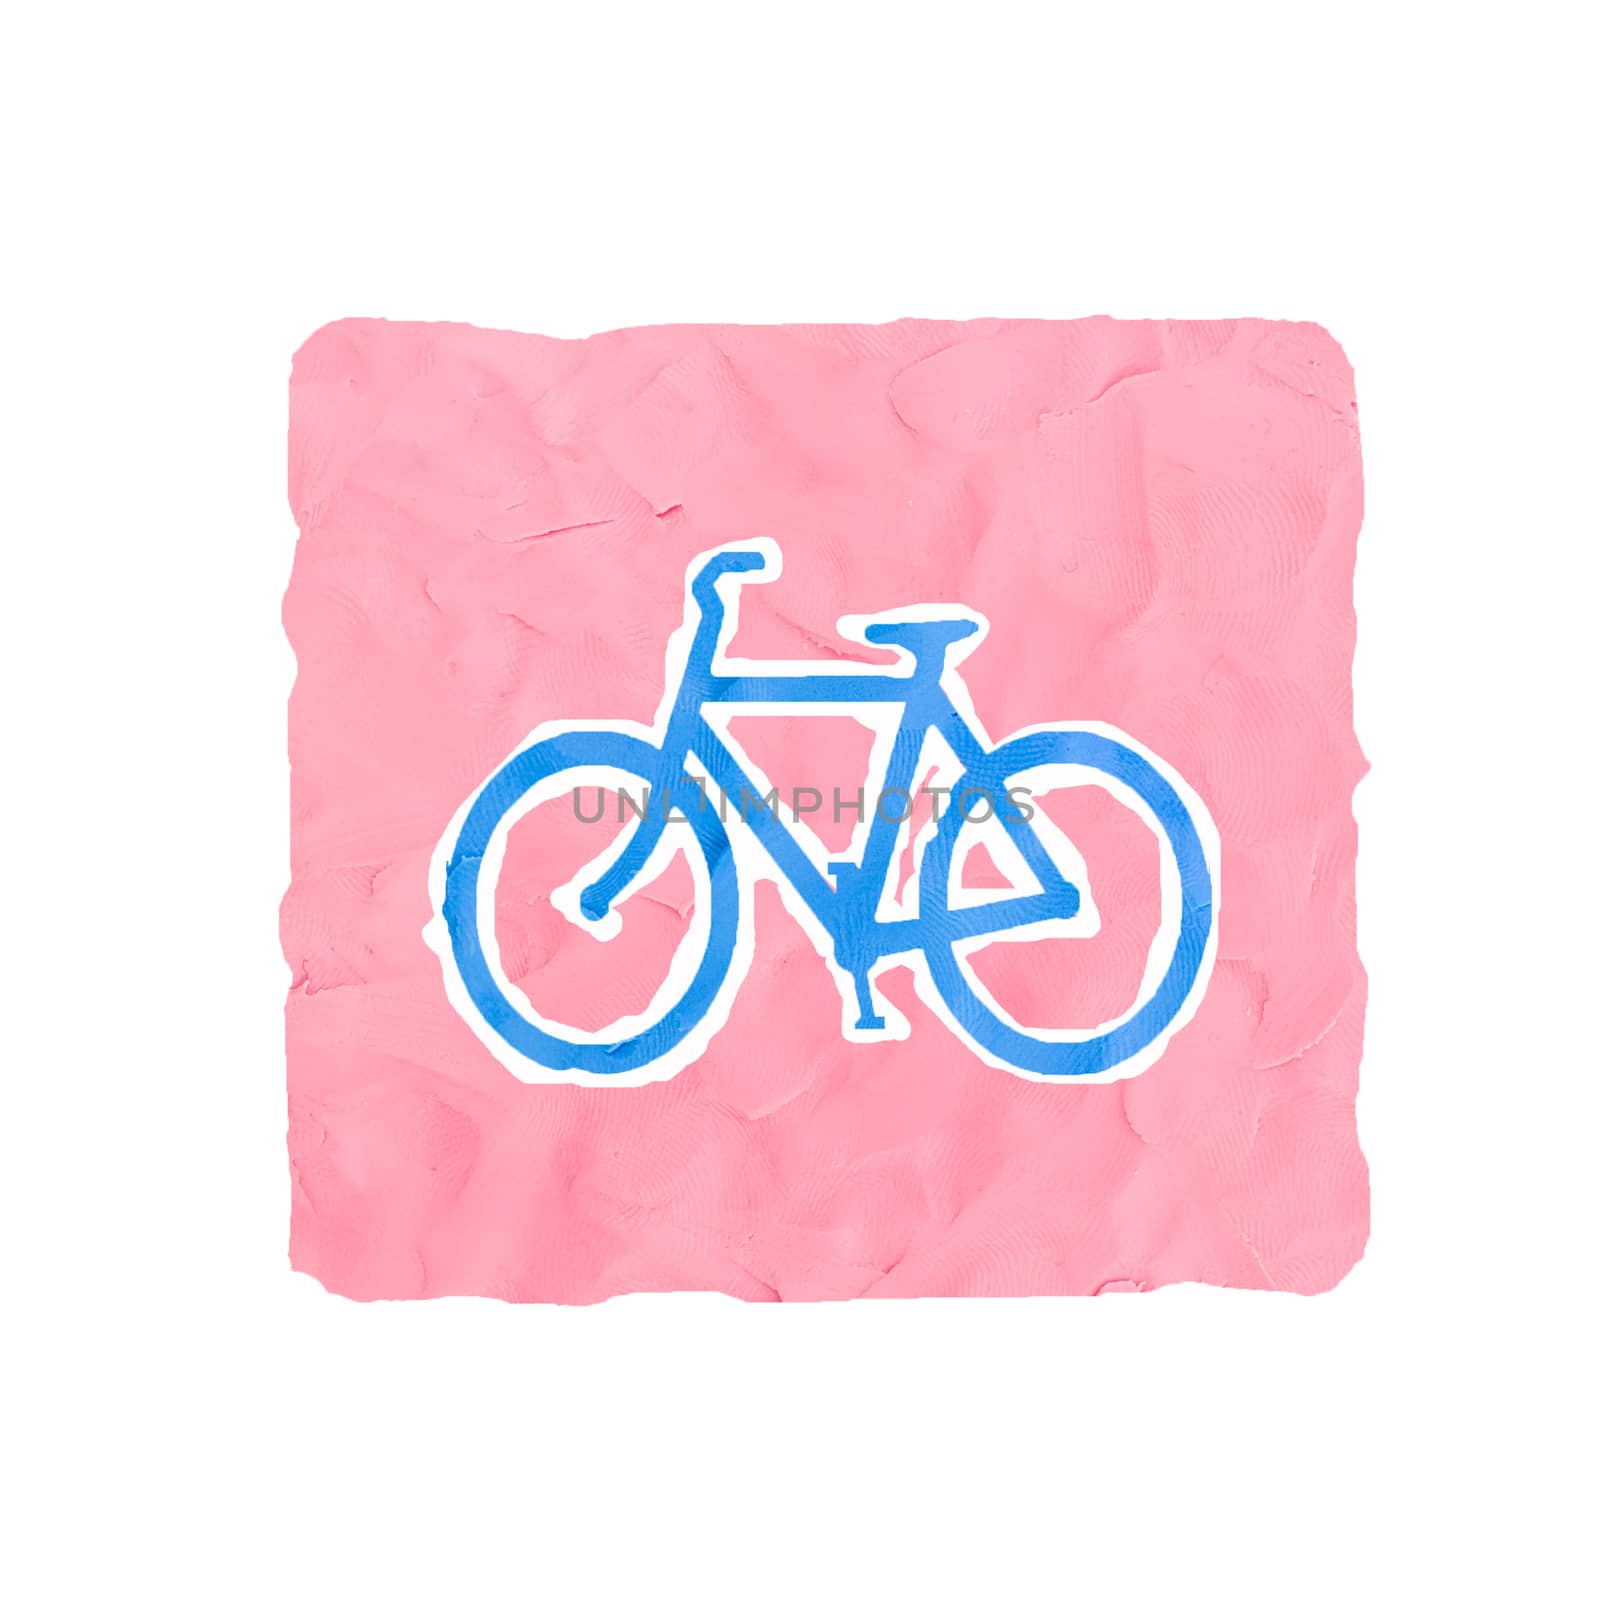 Bicycle icon handmade isolated on white background